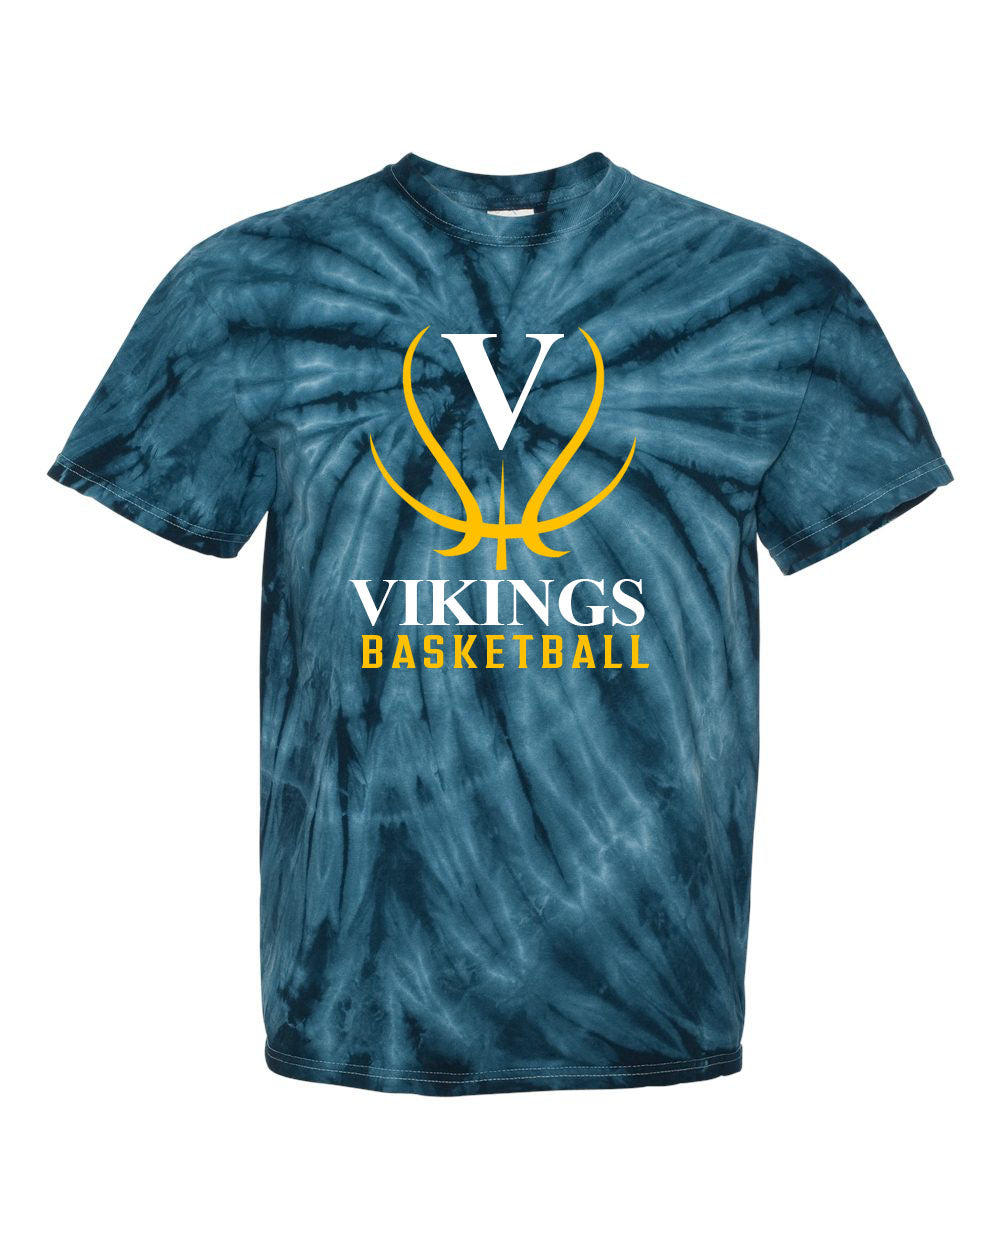 Vikings Basketball Tie Dye t-shirt Design 3